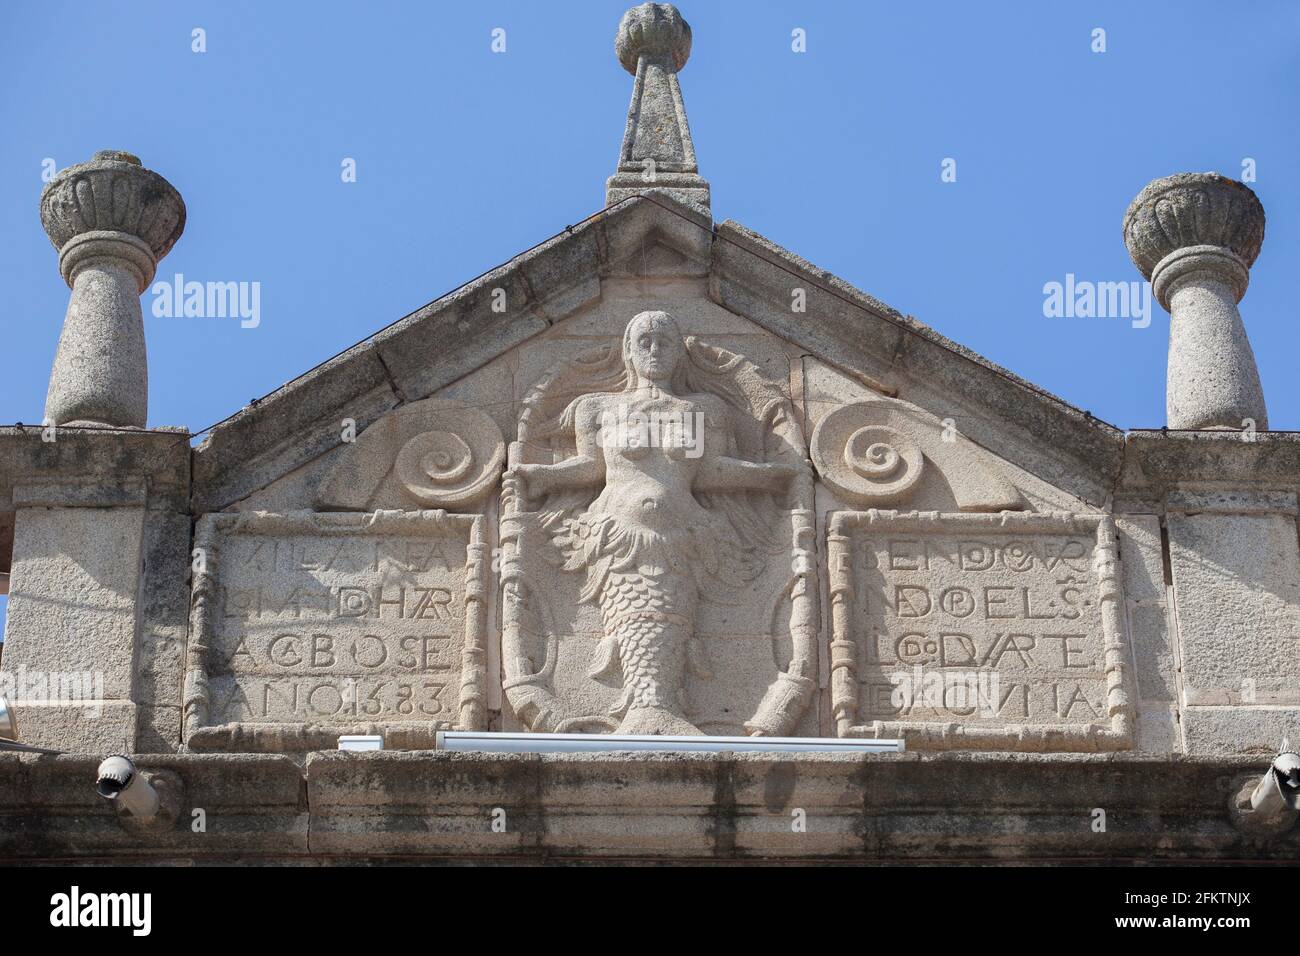 Wappen mit Meerjungfrauen-Relief in Villanueva de la Serena, Badajoz, Spanien. Dieses mythologische Wesen ist das Symbol des Dorfes. Stockfoto